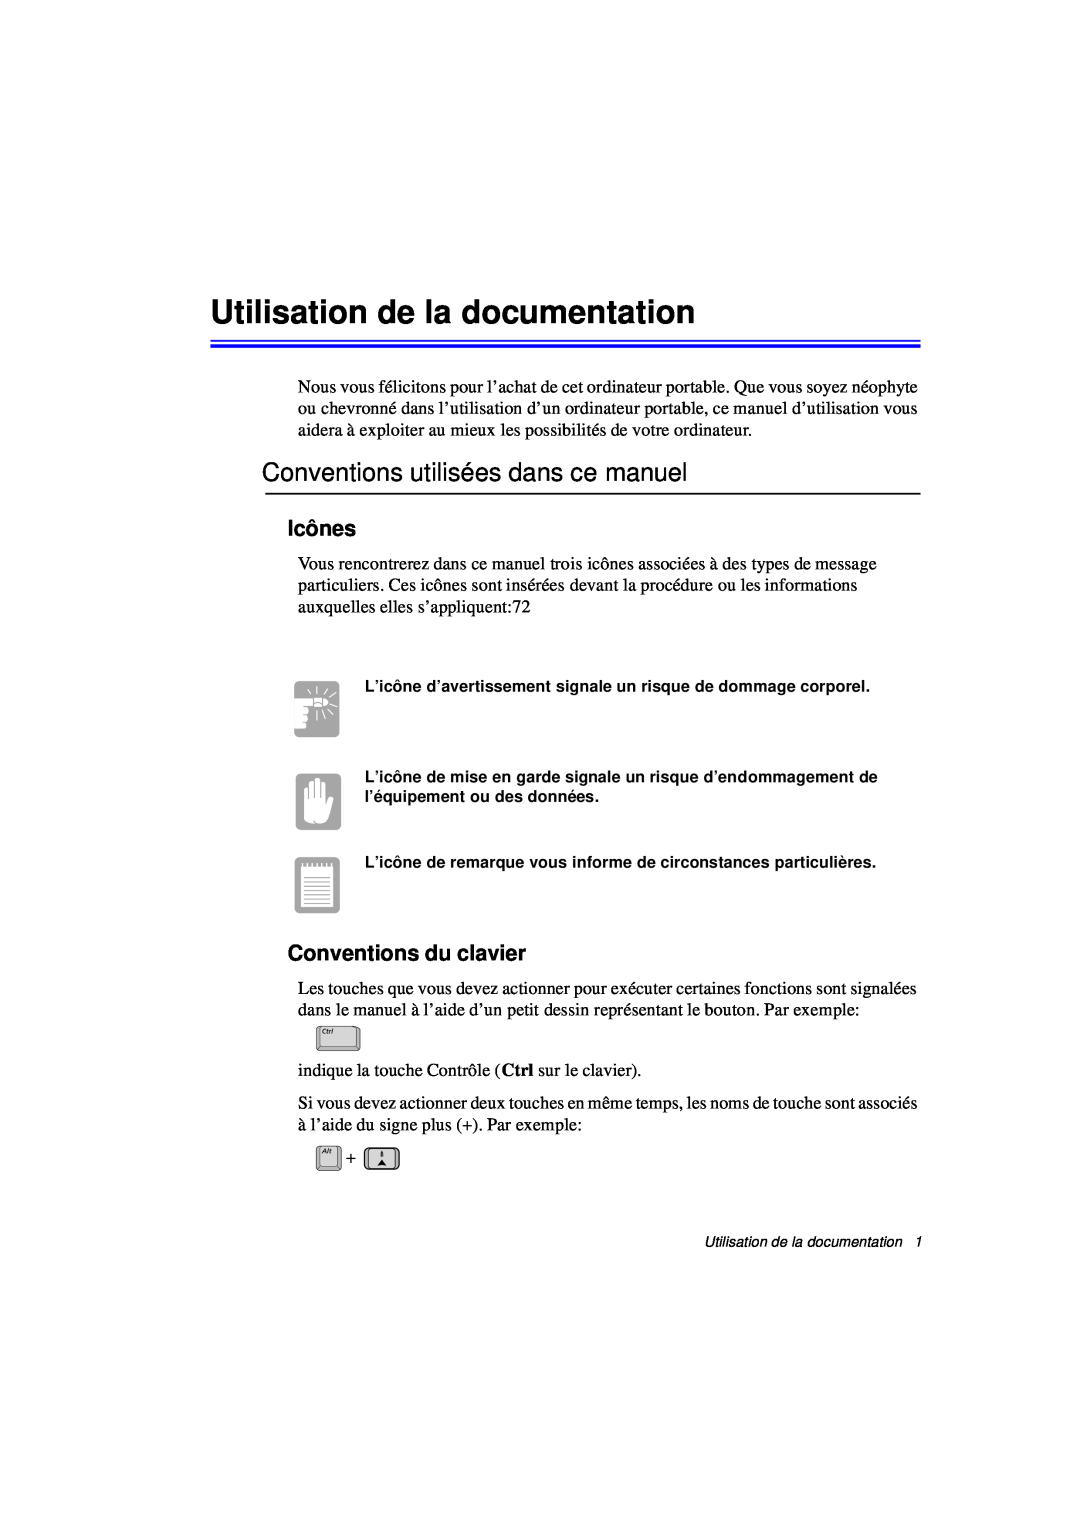 Samsung N760FS2028/SEF, N760PJ2008/SEF manual Utilisation de la documentation, Conventions utilisées dans ce manuel, Icônes 